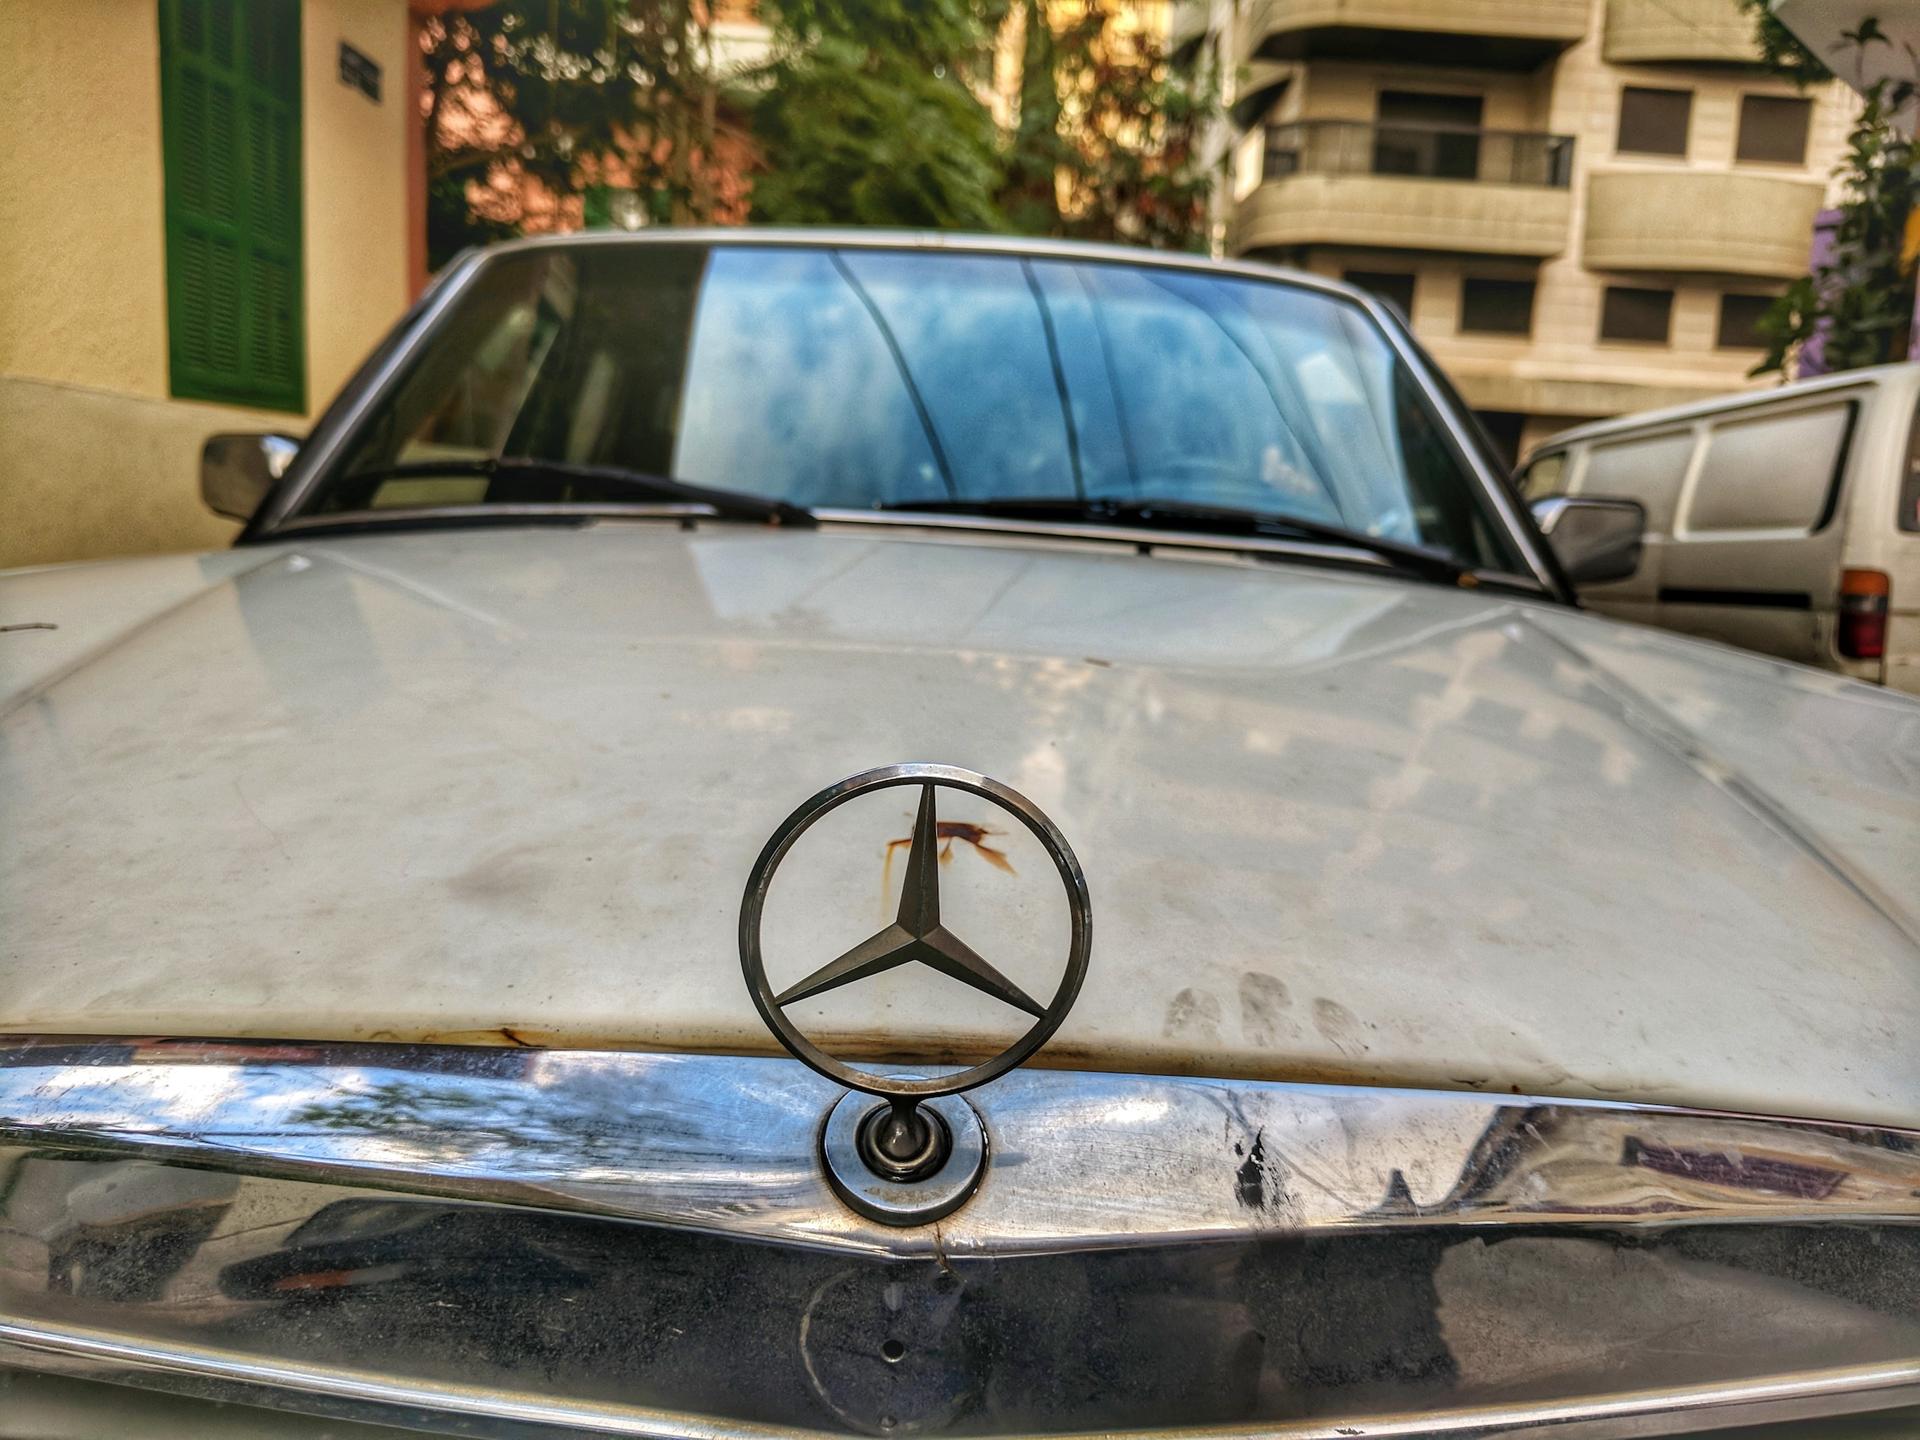 This is Gabriel Saad's taxi, a 1980 Mercedes Benz.